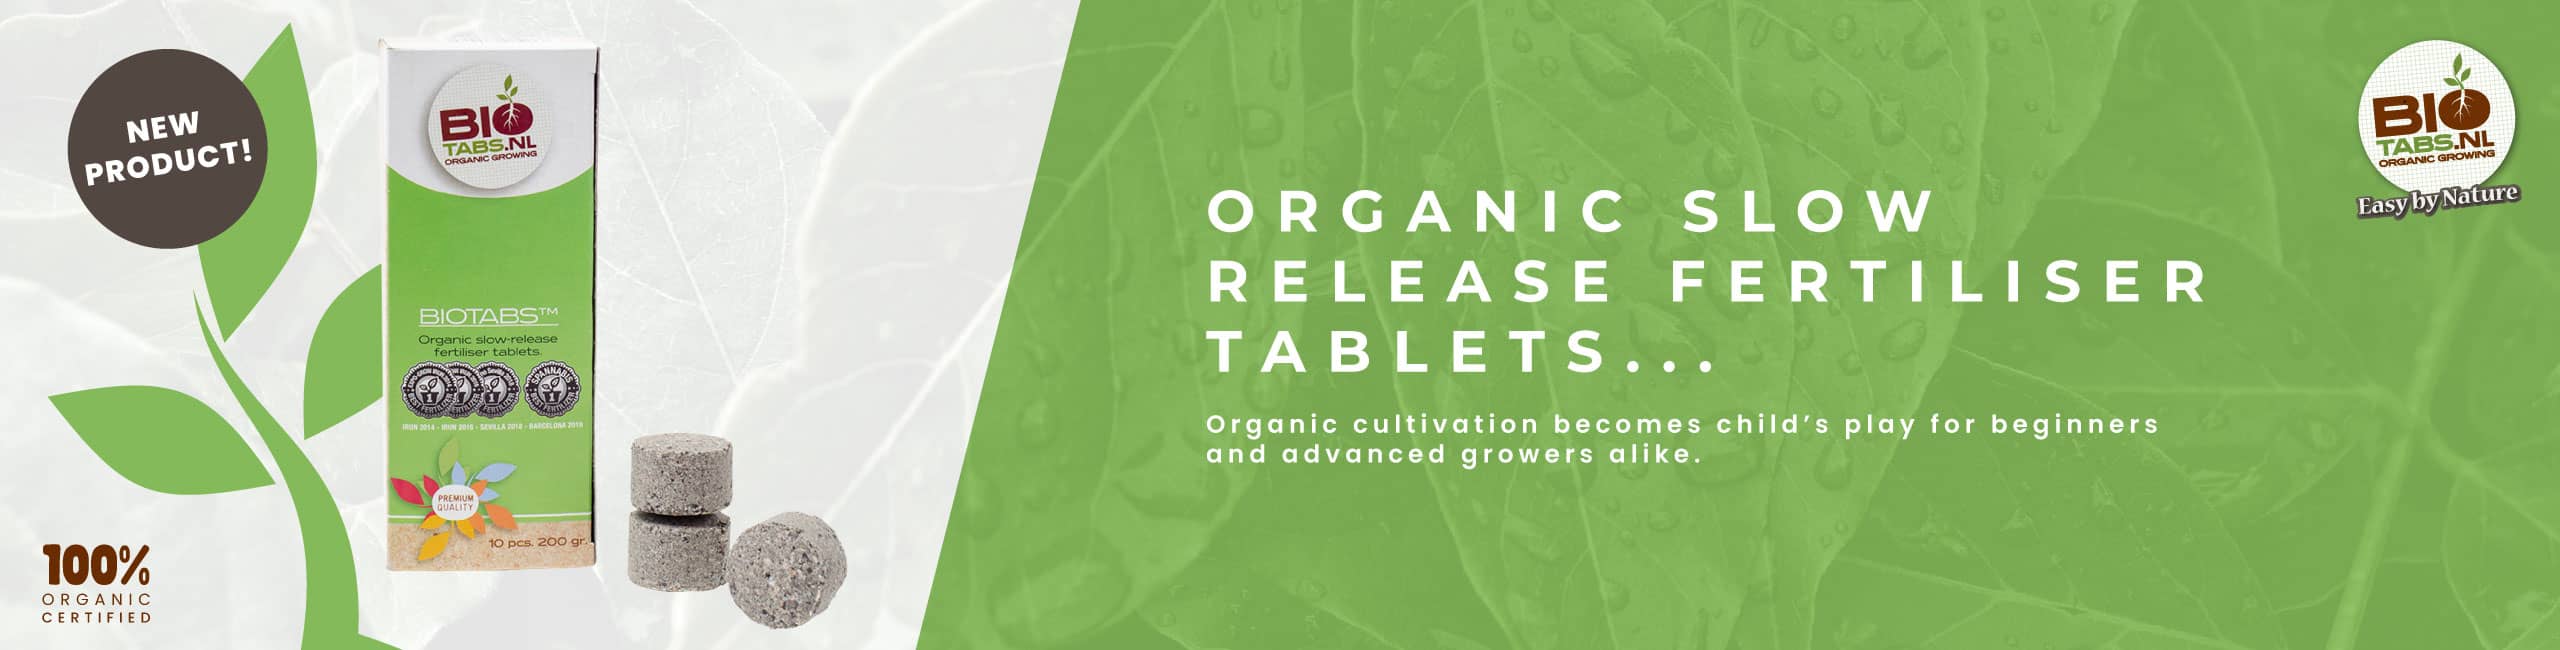 BioTabs Organic Fertiliser Tablets 